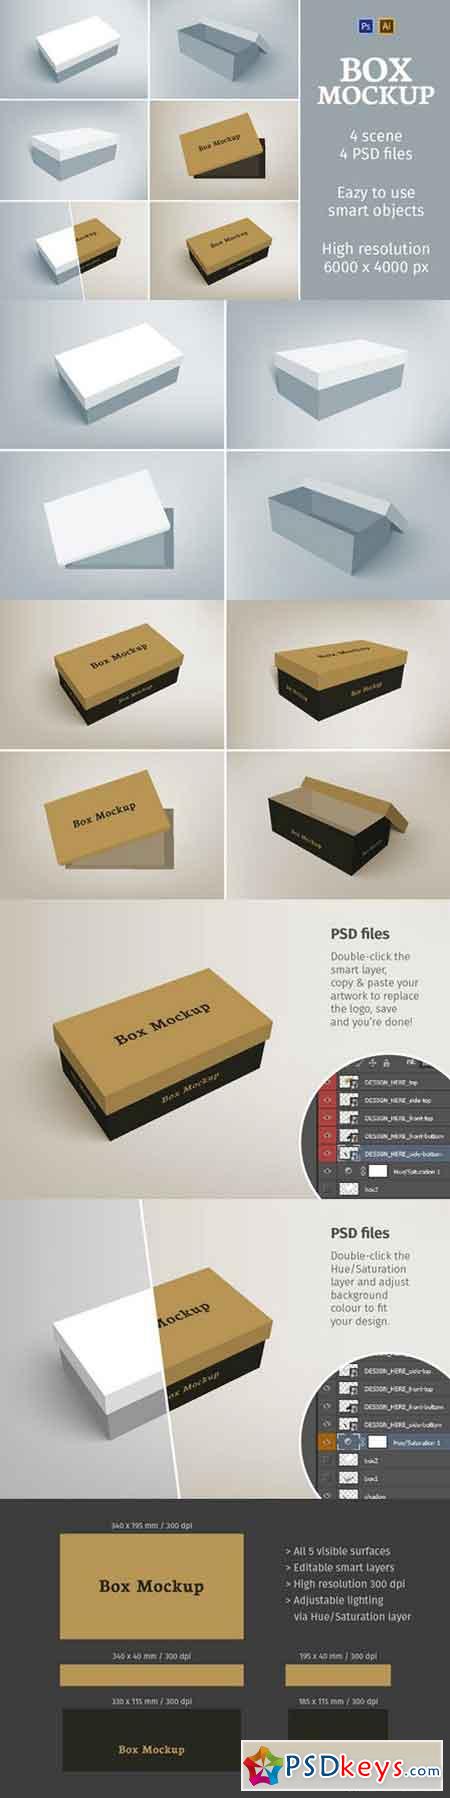 Shoes Packaging Box Mockup 658570